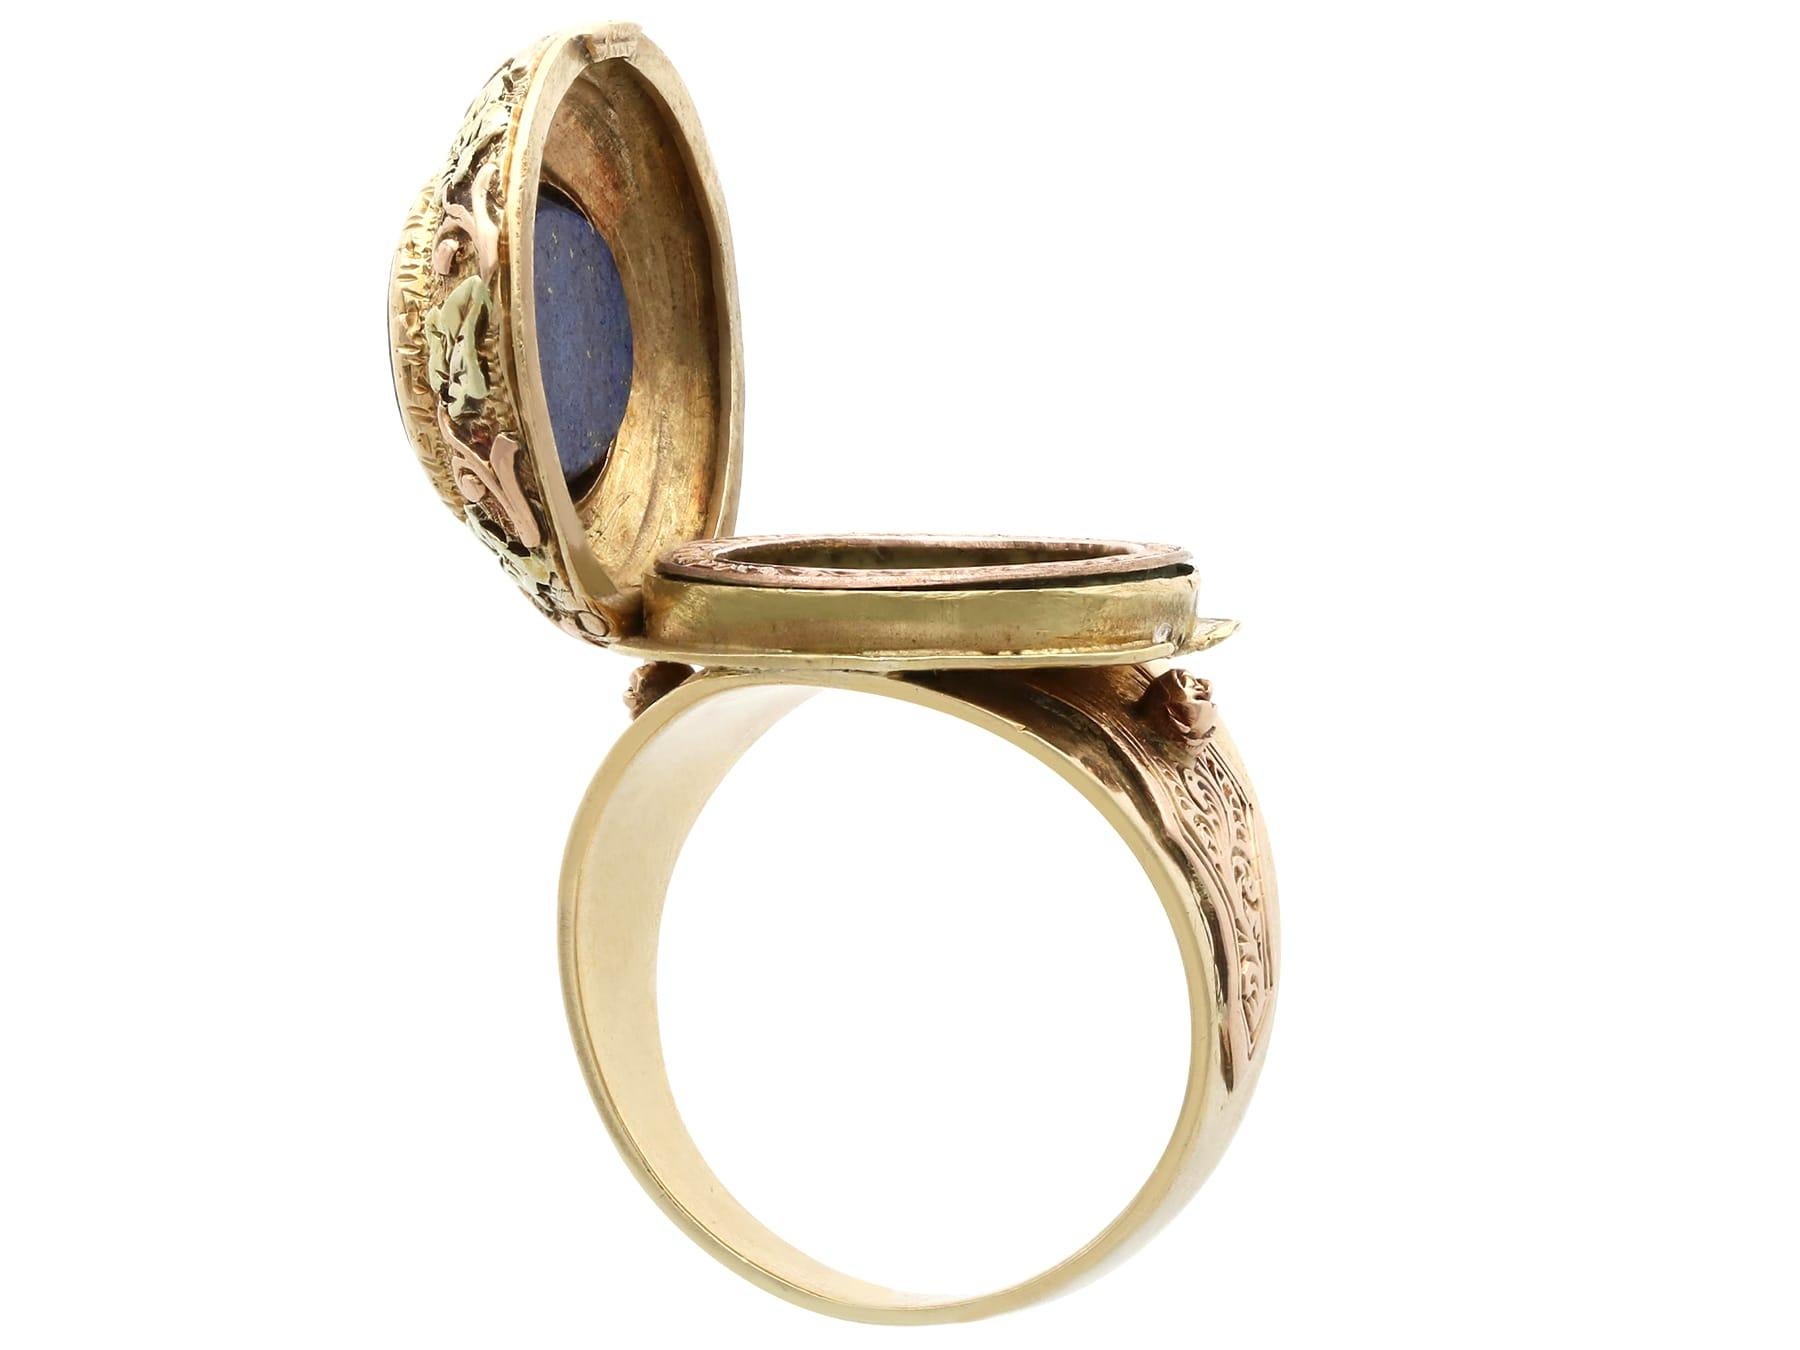 Antique 3.02Ct Lapis Lazuli and 15k Yellow Gold Locket Ring Circa 1880 For Sale 5